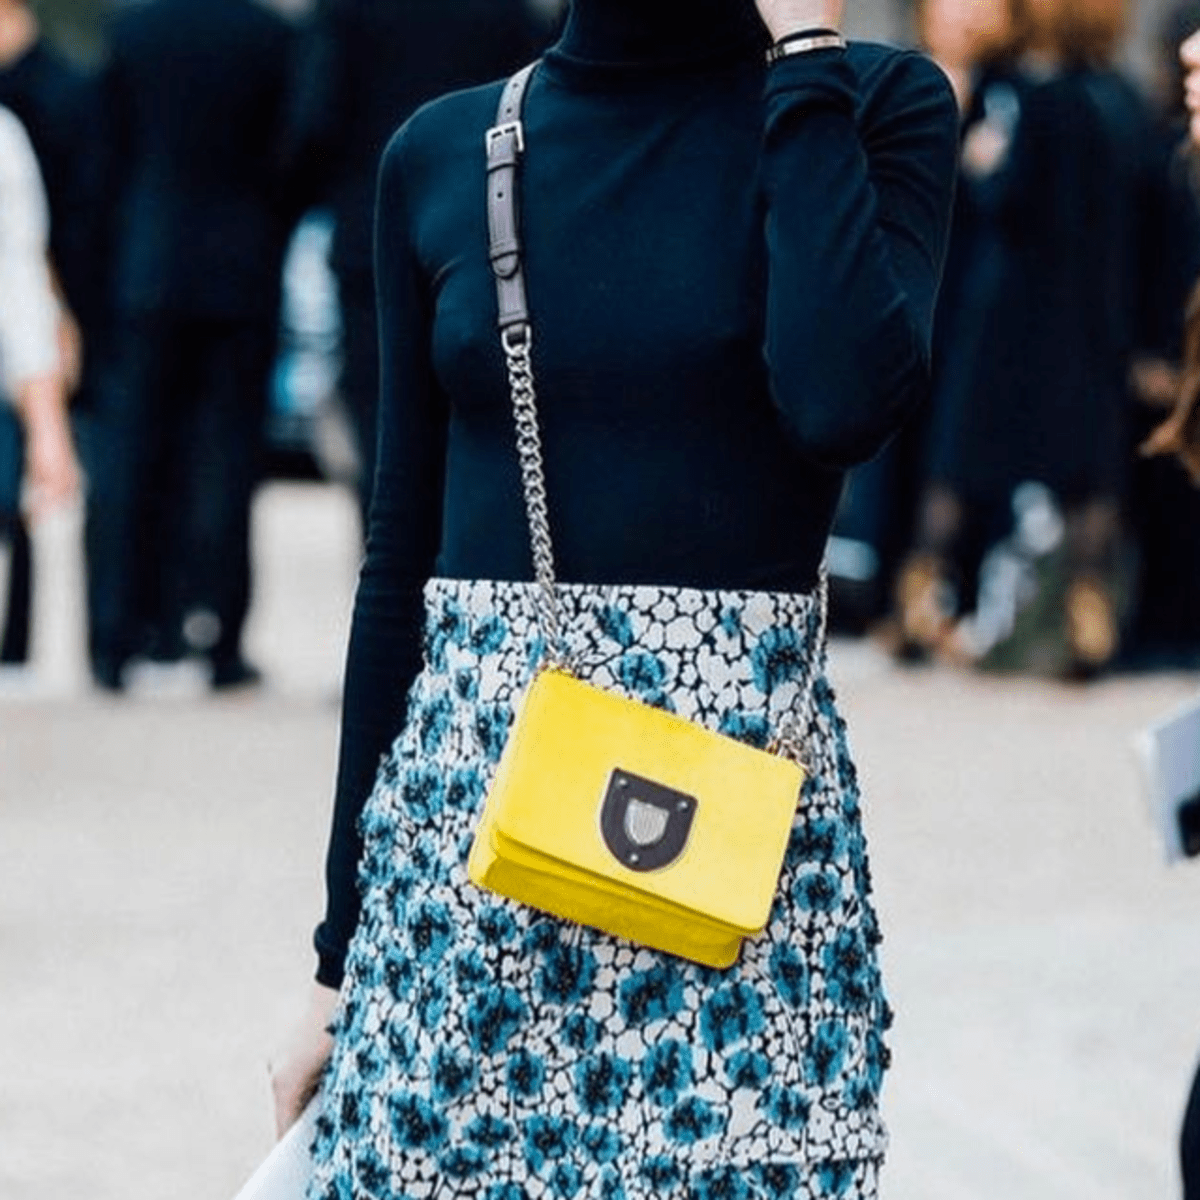 Louis Vuitton purse Regina George  Girly bags, Pretty bags, 2000s fashion  outfits